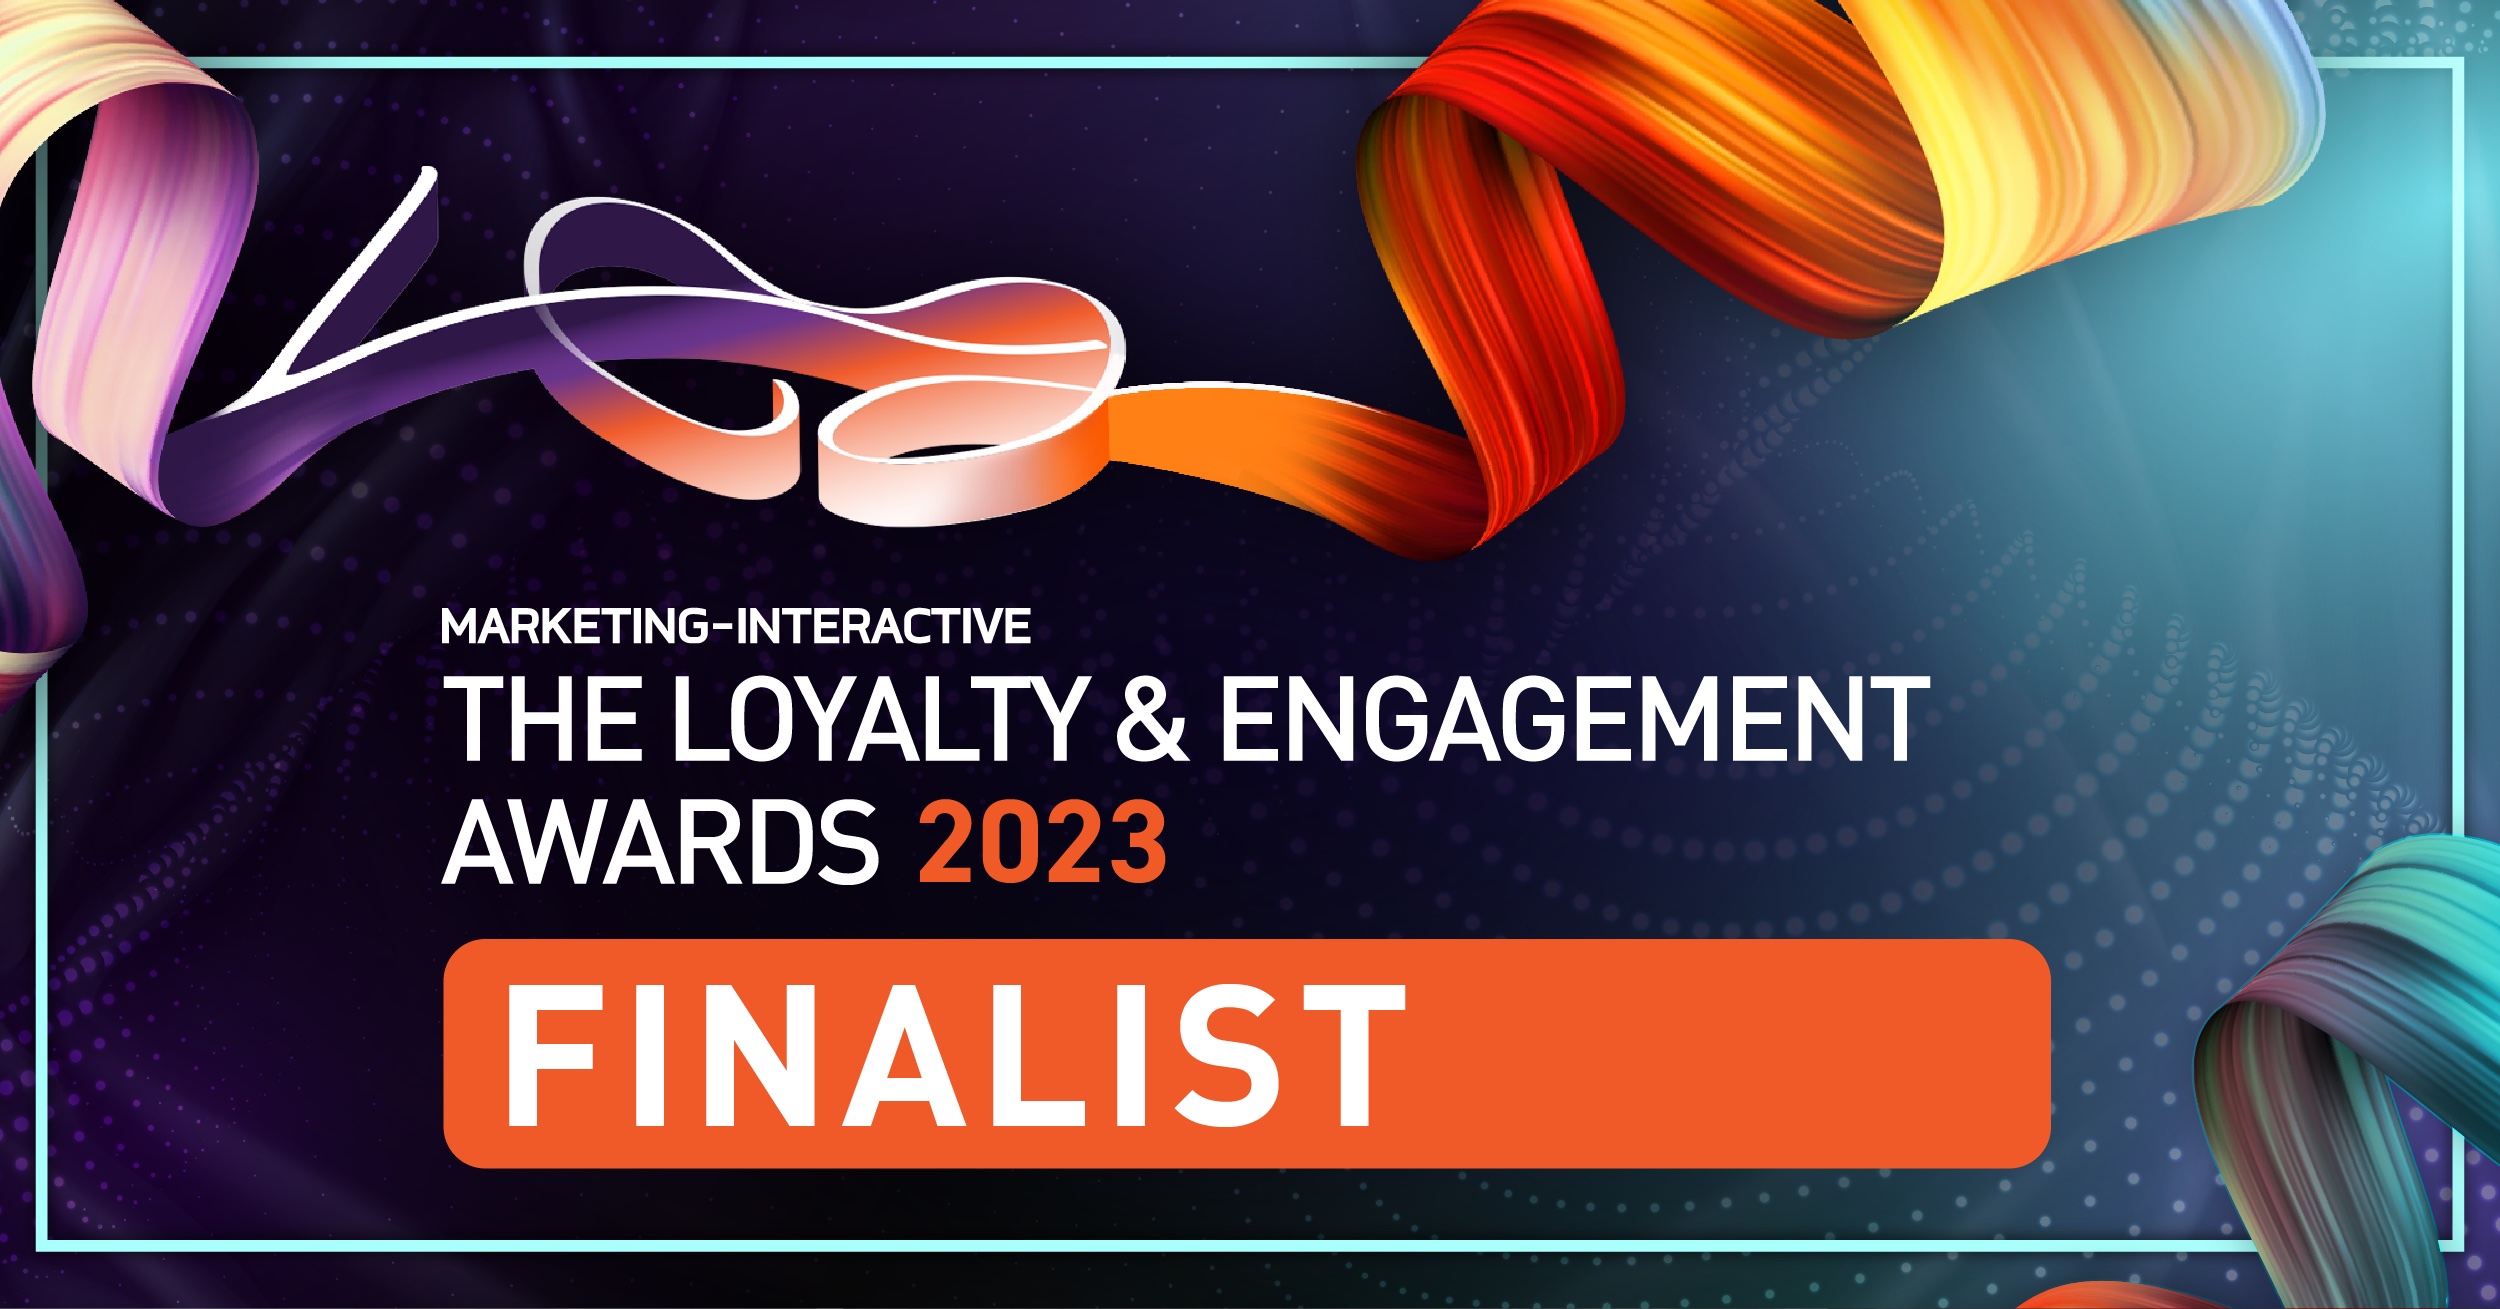 Loyalty & engagement awards finalist